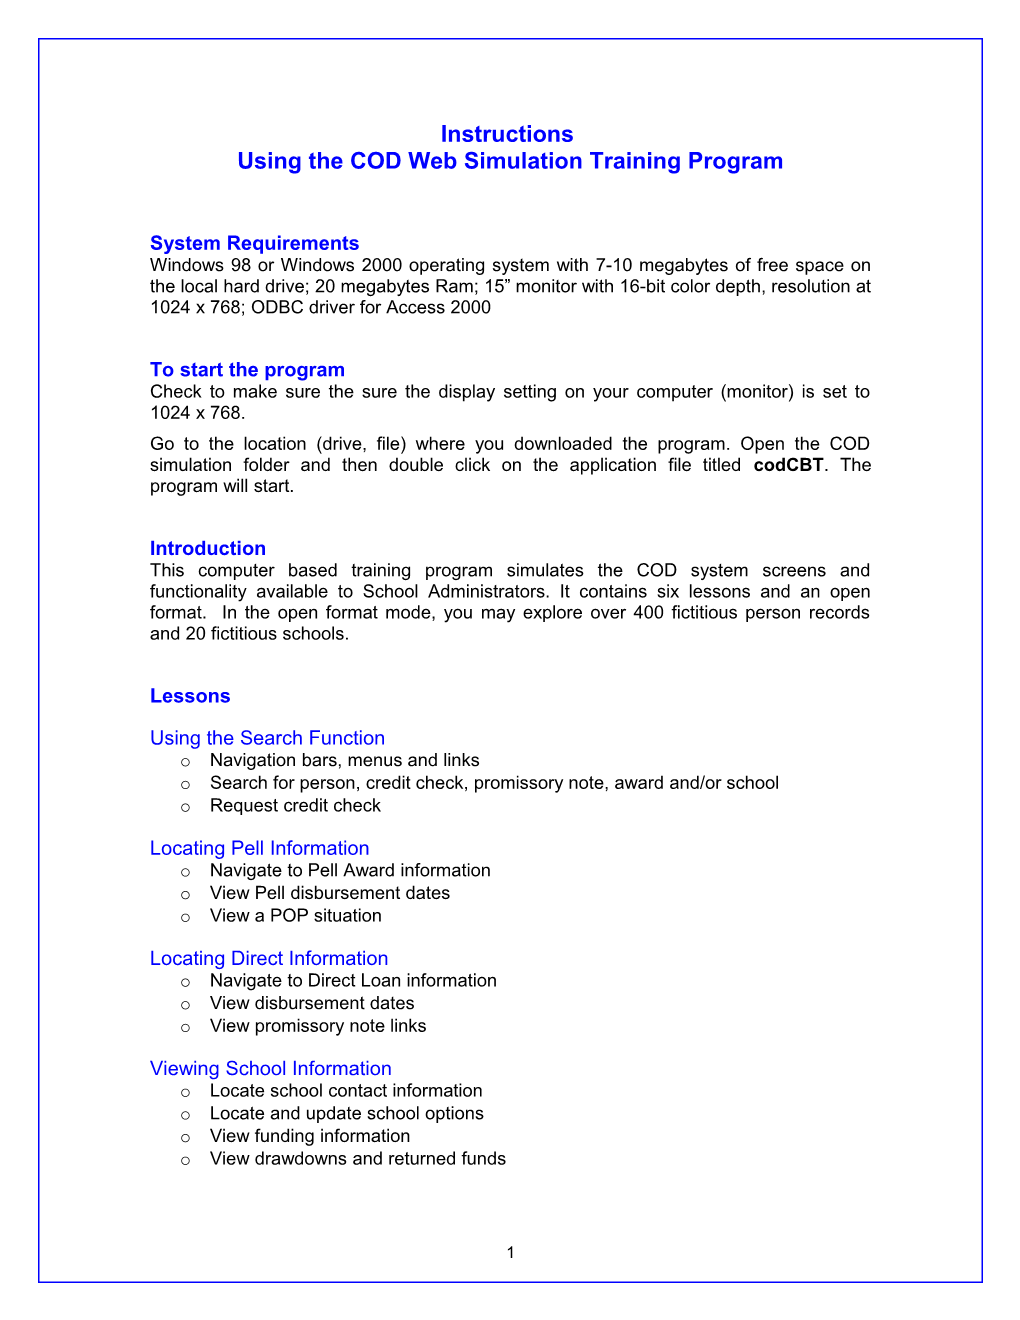 Guide to Using the COD Web Simulation Training Program